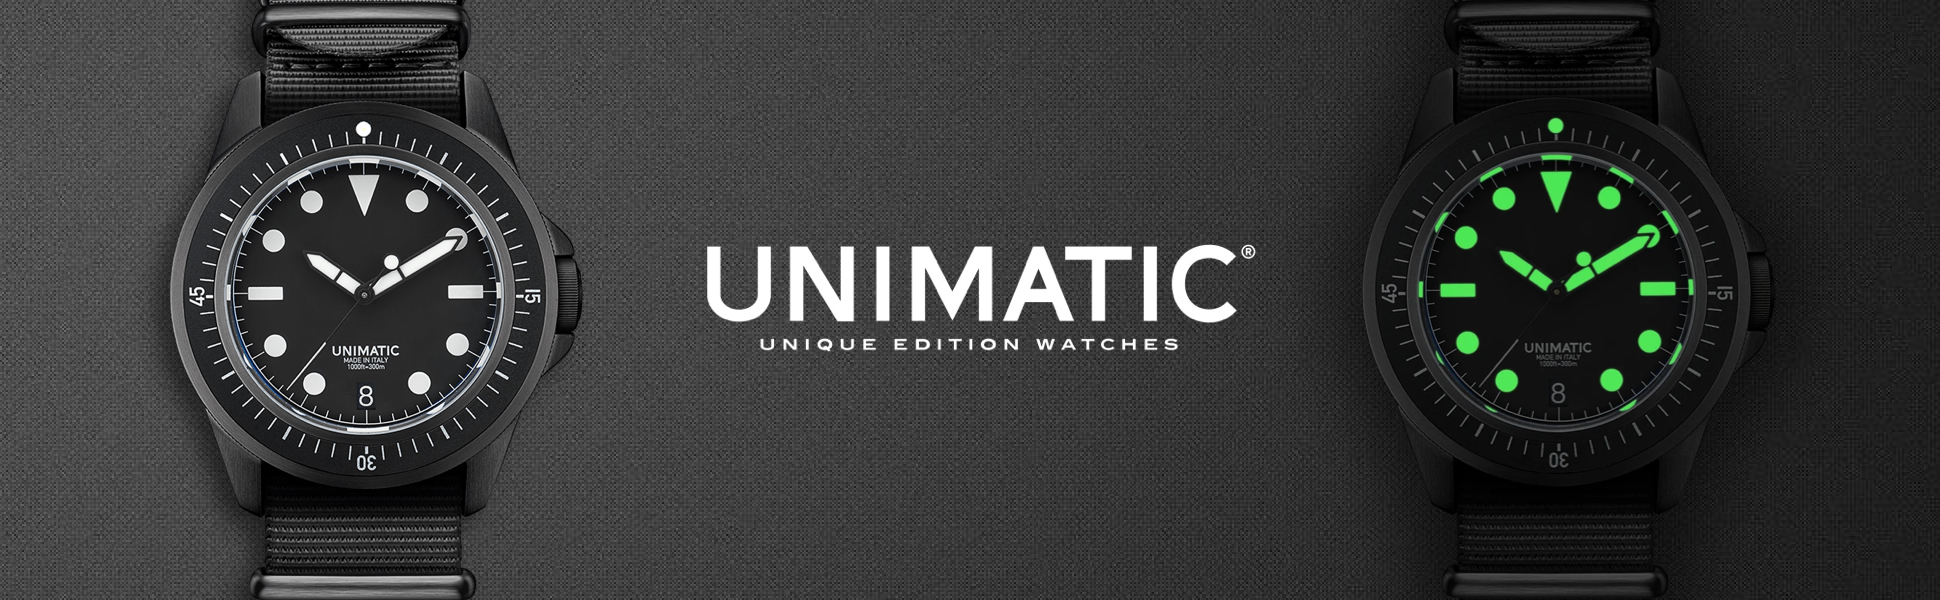 Unimatic | Image